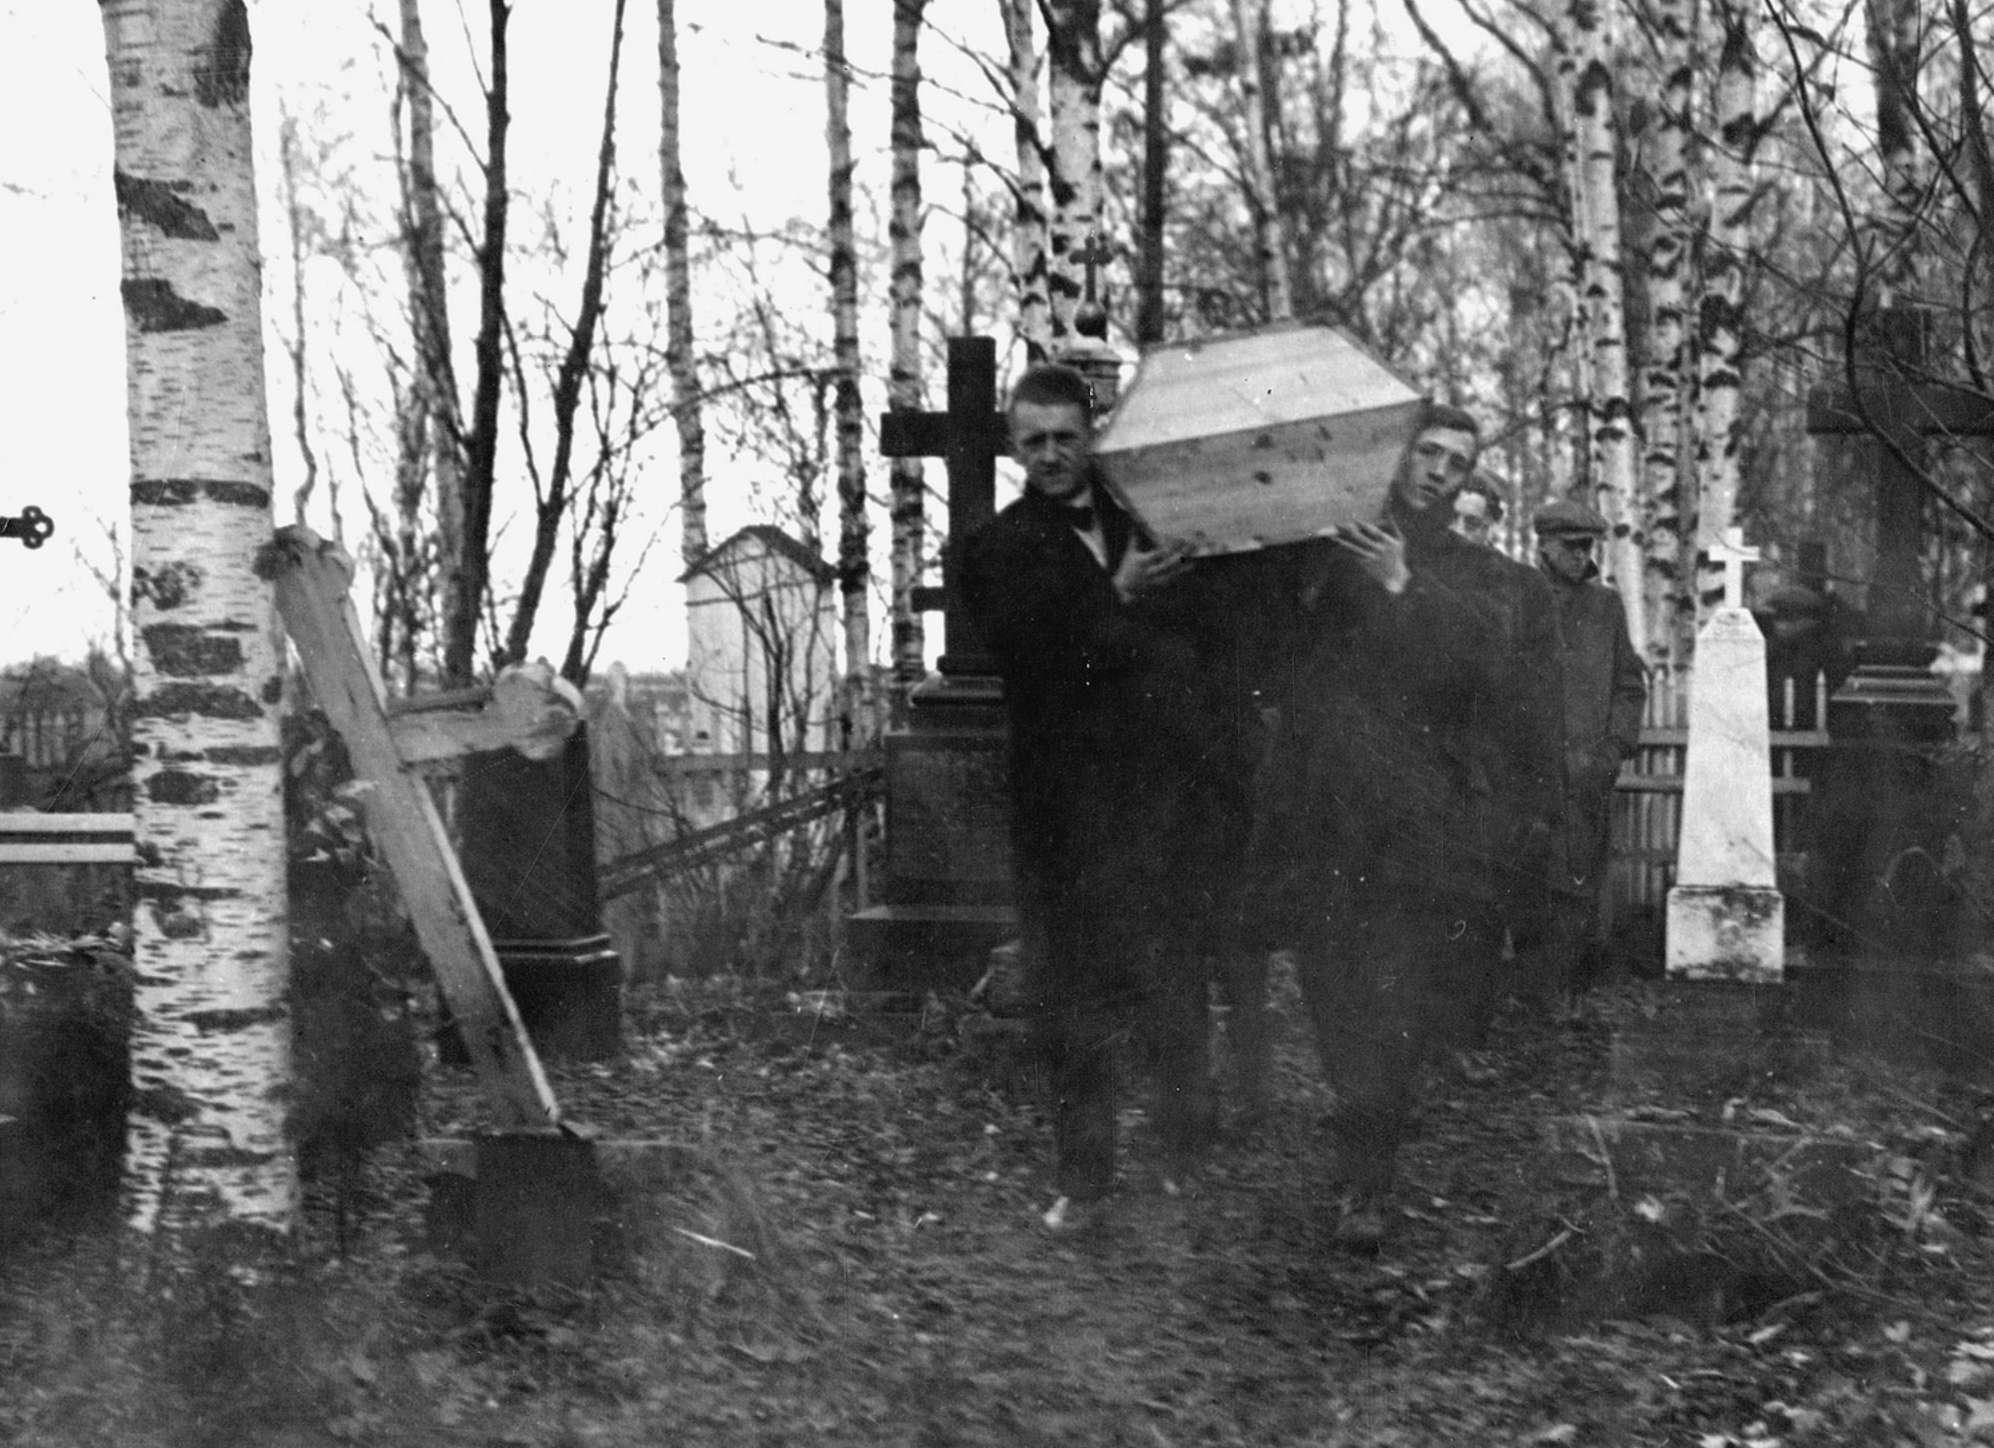 Похоронили начало. Снимки с похорон 20 века.